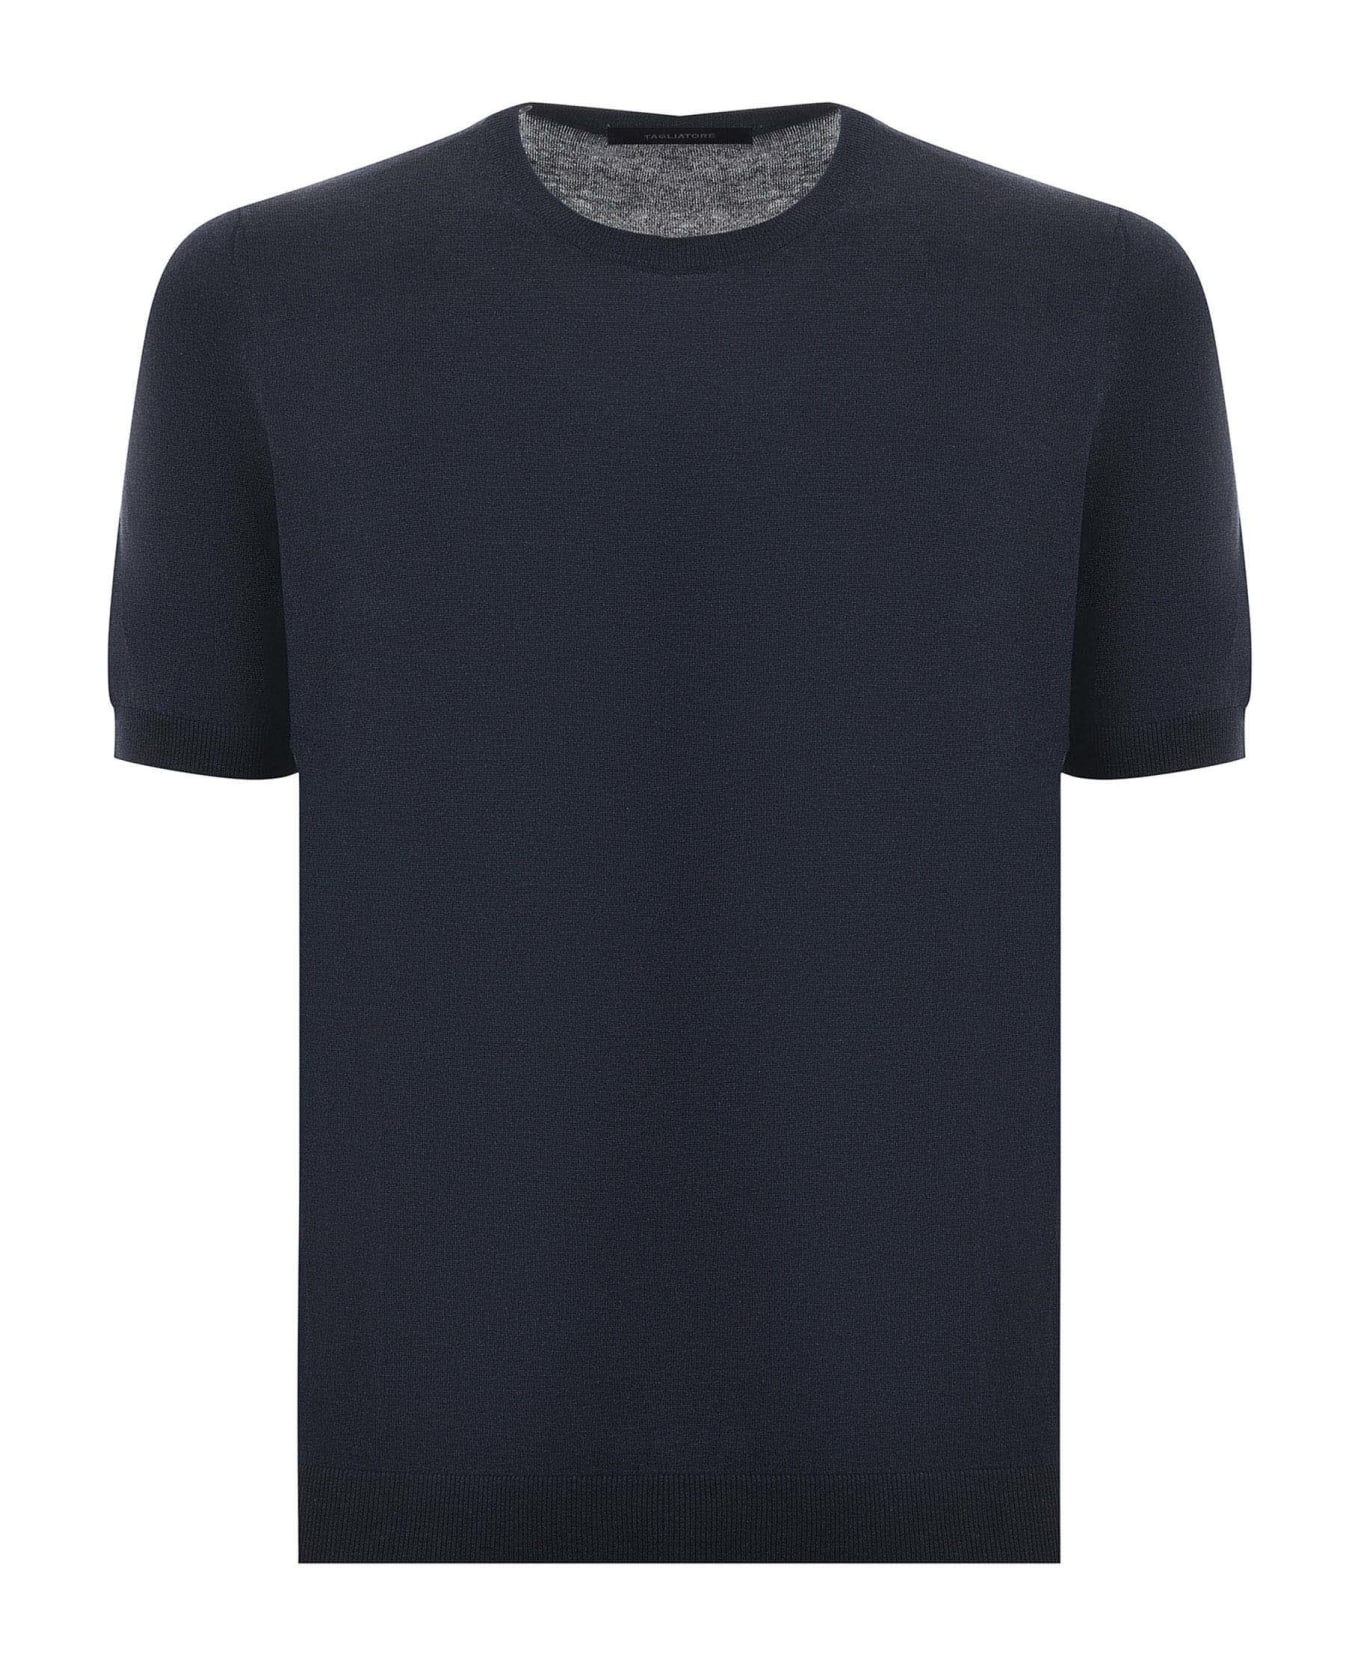 Tagliatore T-shirt - Blu melange